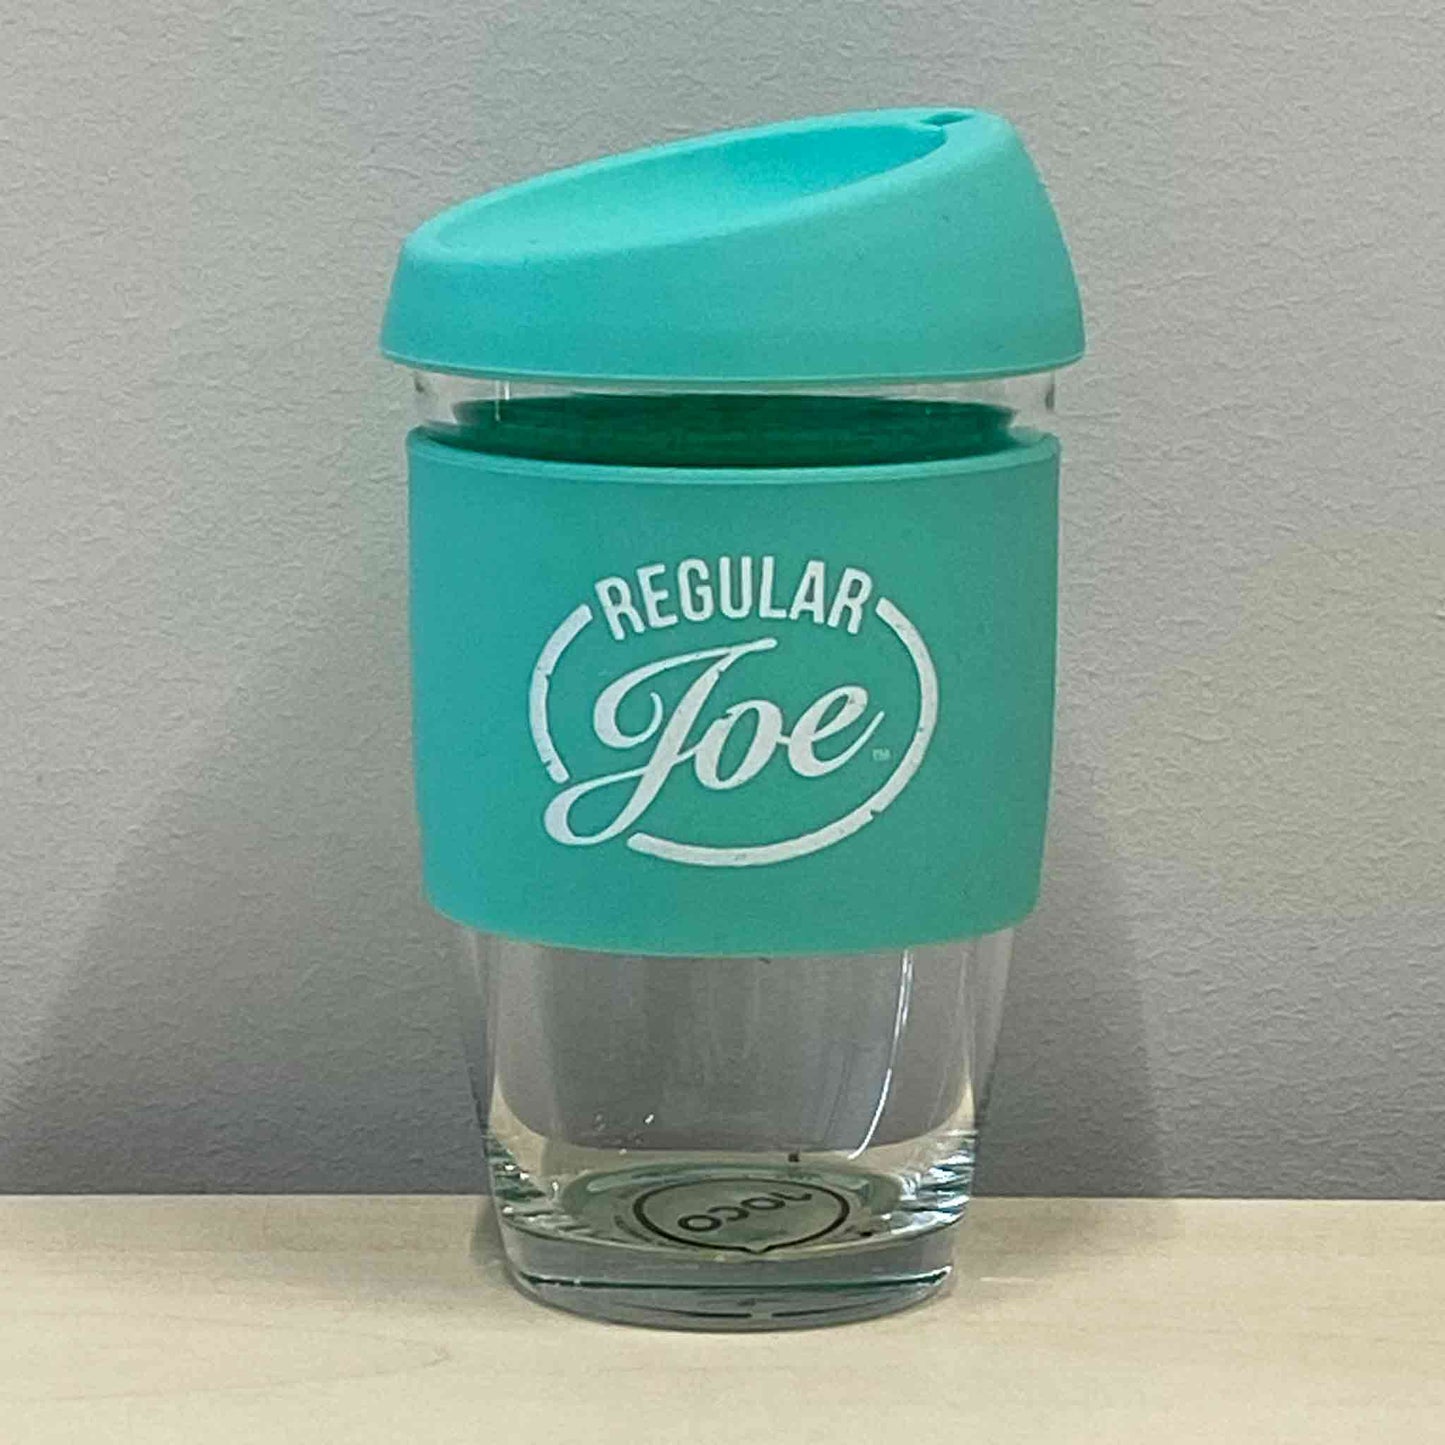 6oz Regular Joe Joco Cup